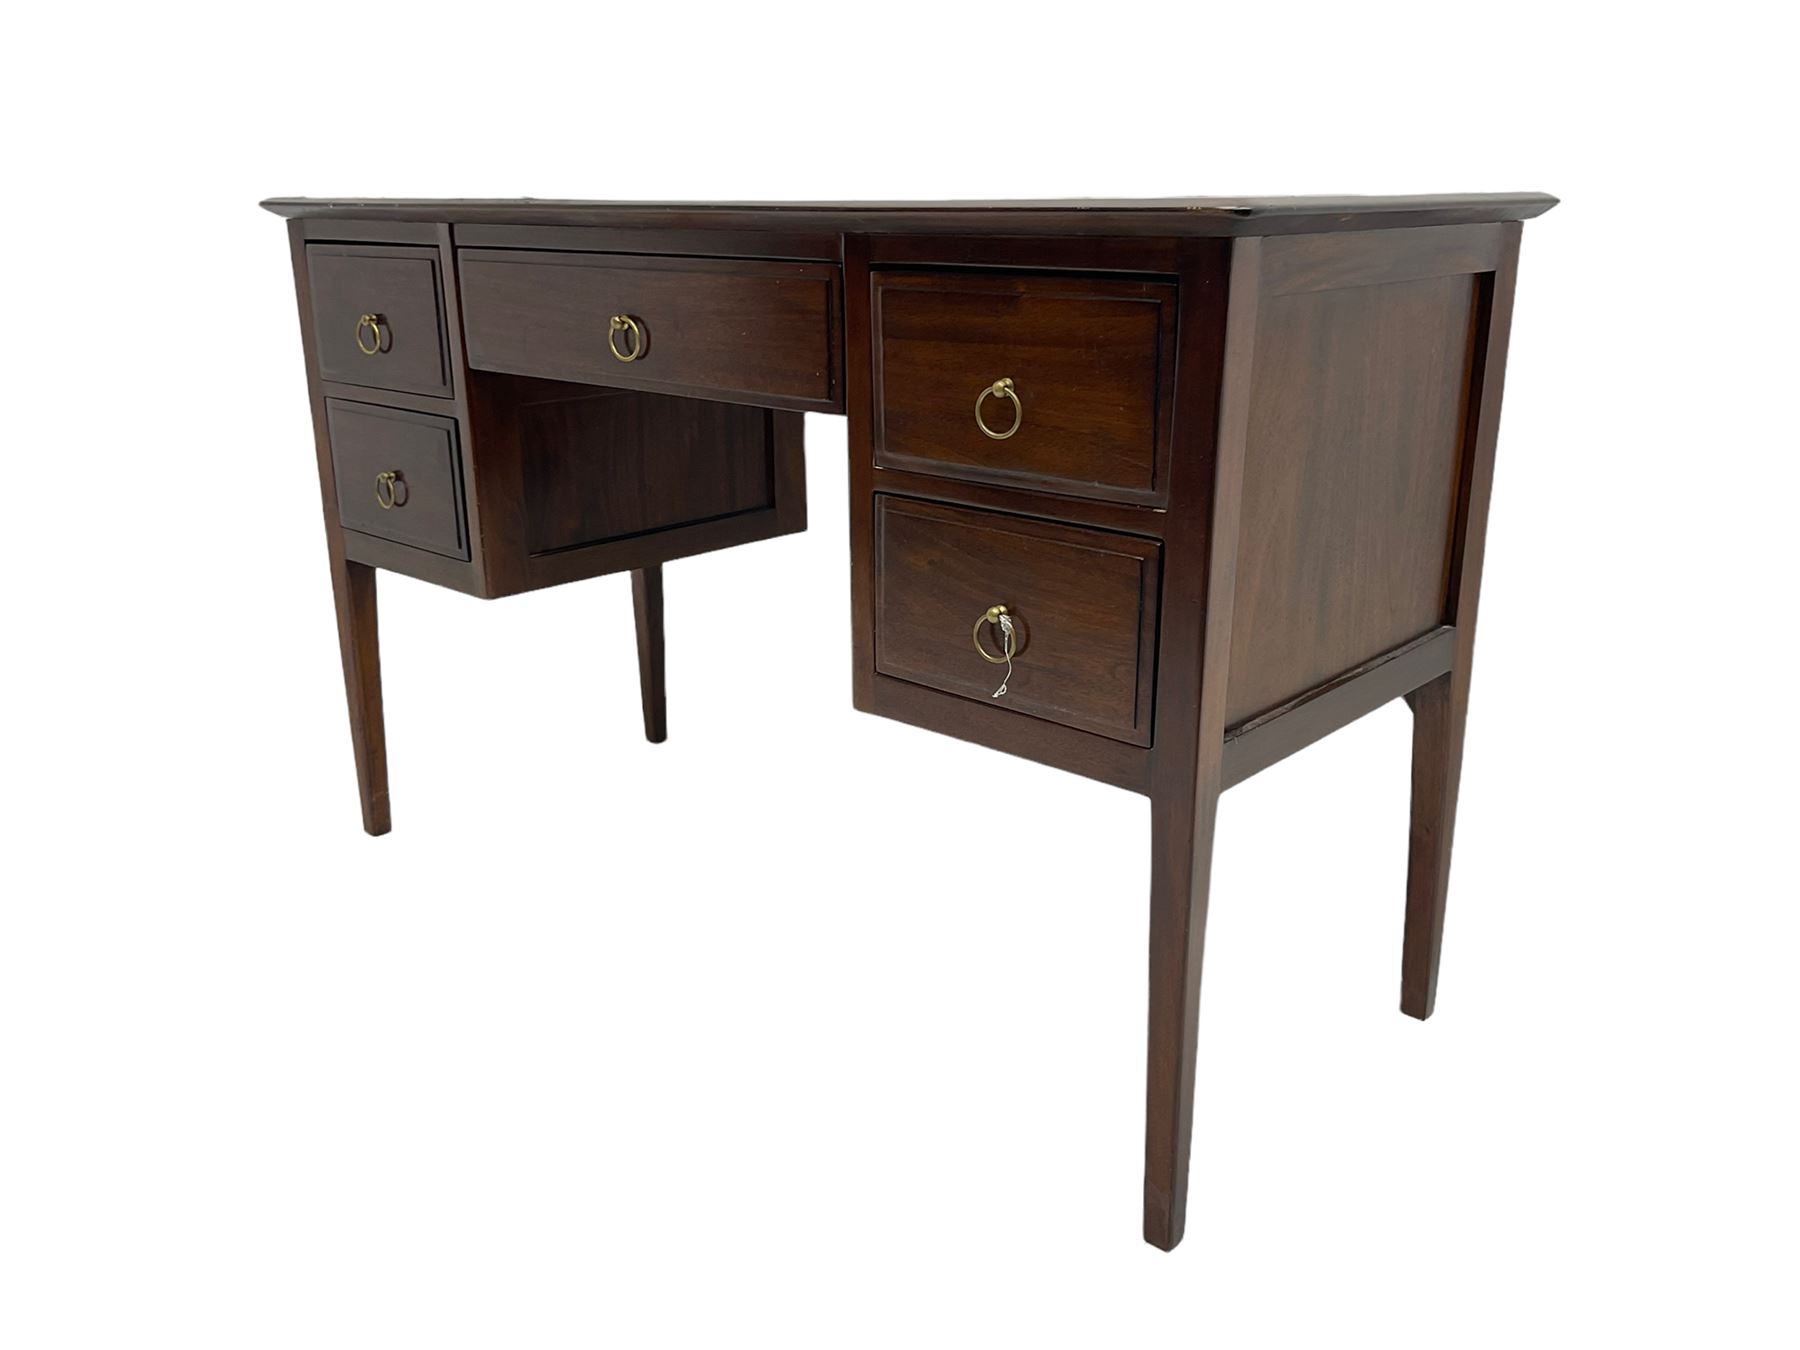 Hardwood kneehole dressing table or desk - Image 6 of 10